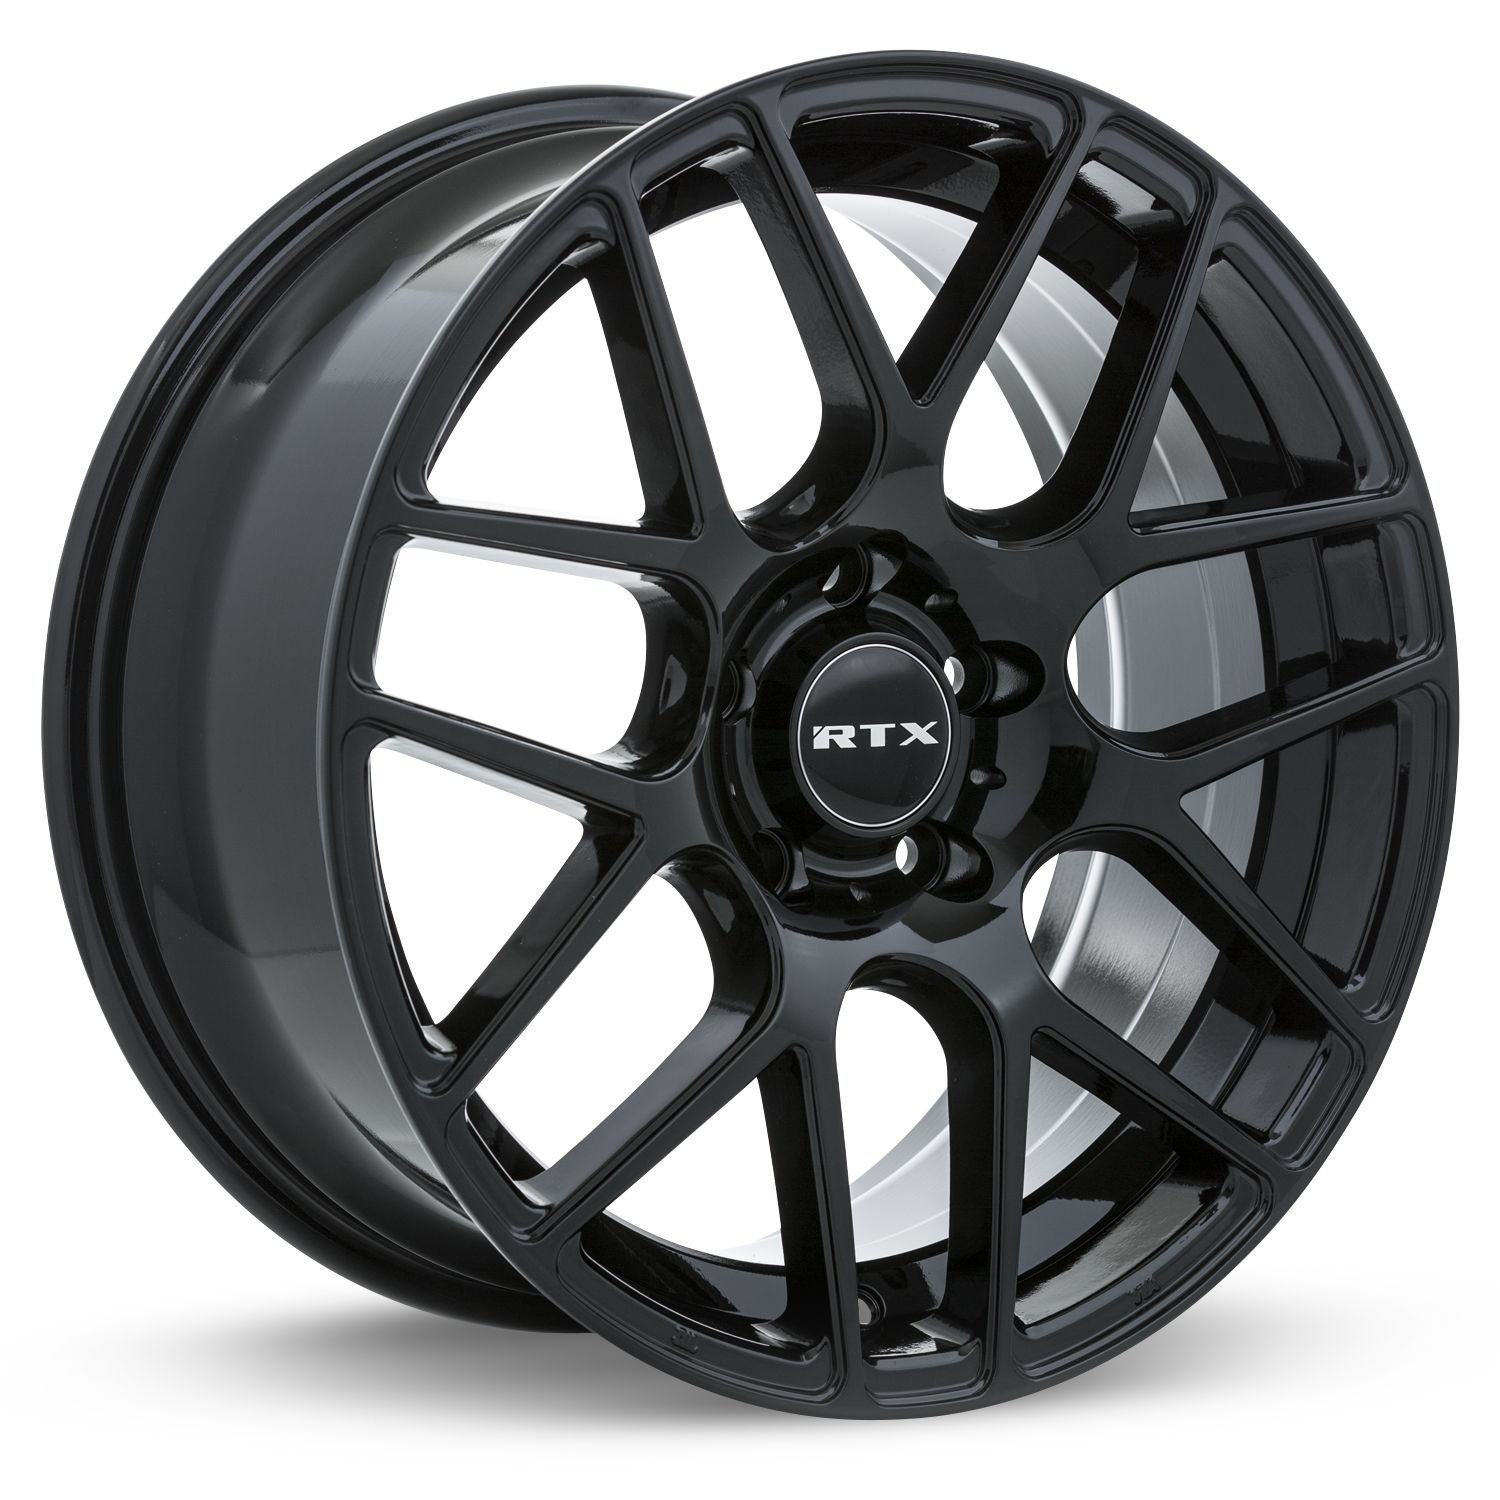 082762 RTX-Series Envy Wheel [Size: 18" x 8"] Gloss Black Finish